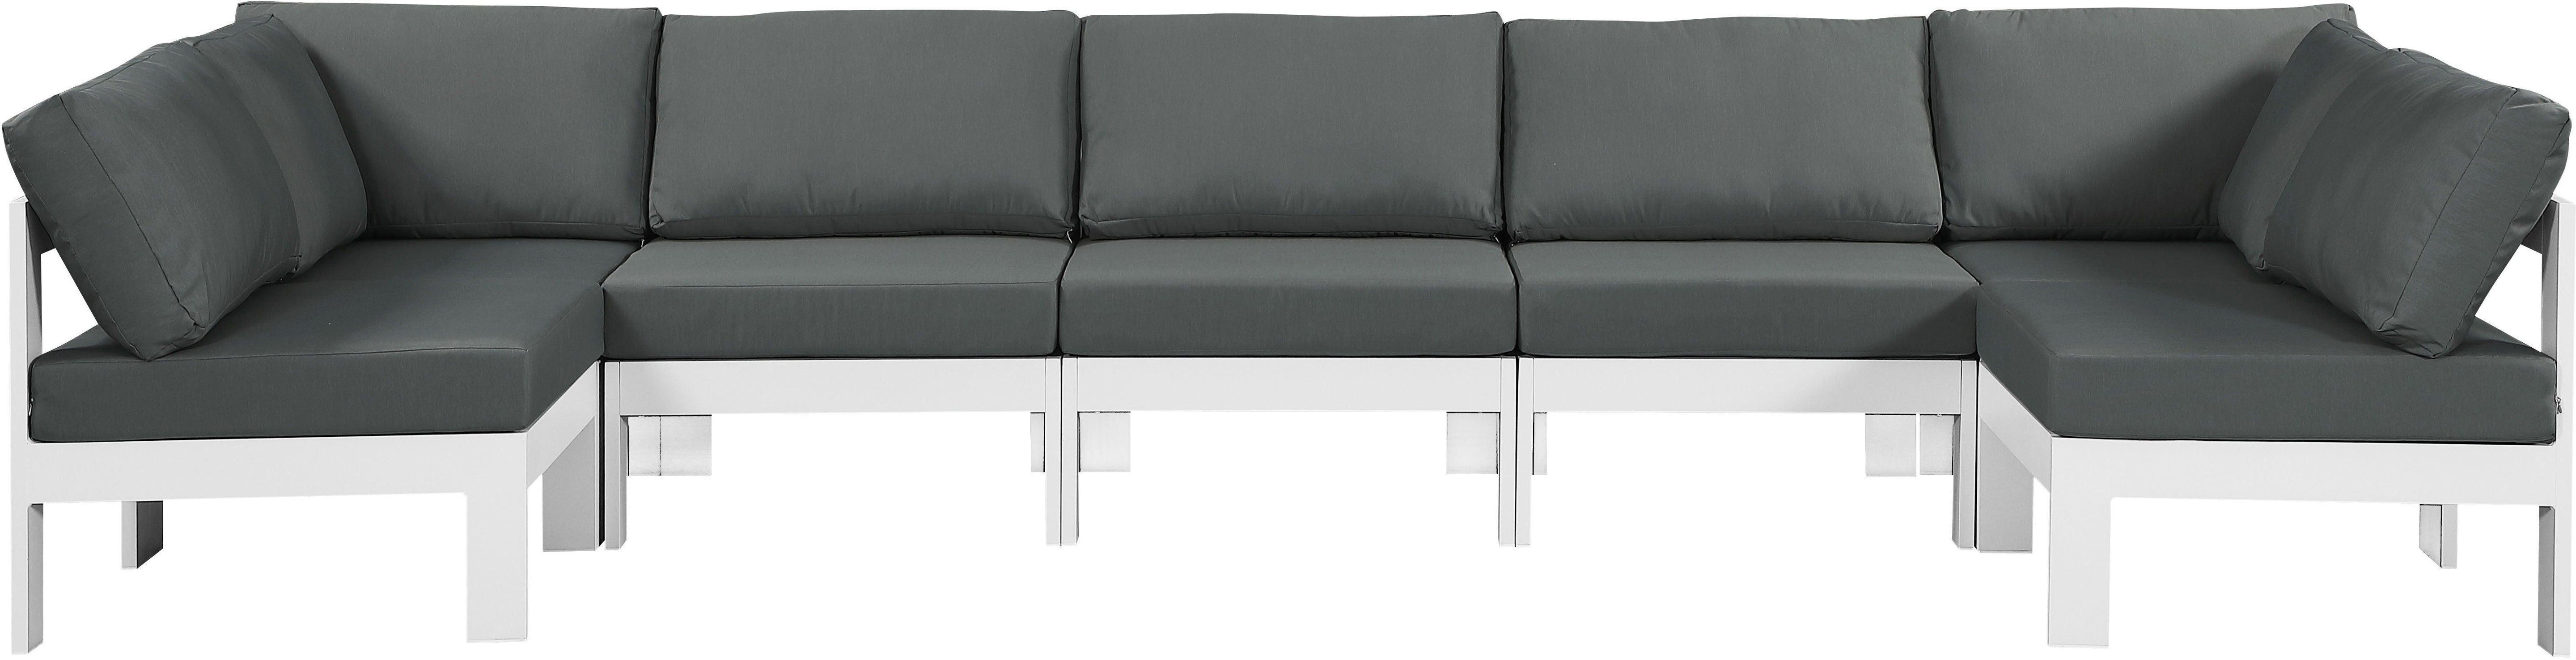 Meridian Furniture - Nizuc - Outdoor Patio Modular Sectional 7 Piece - Grey - 5th Avenue Furniture